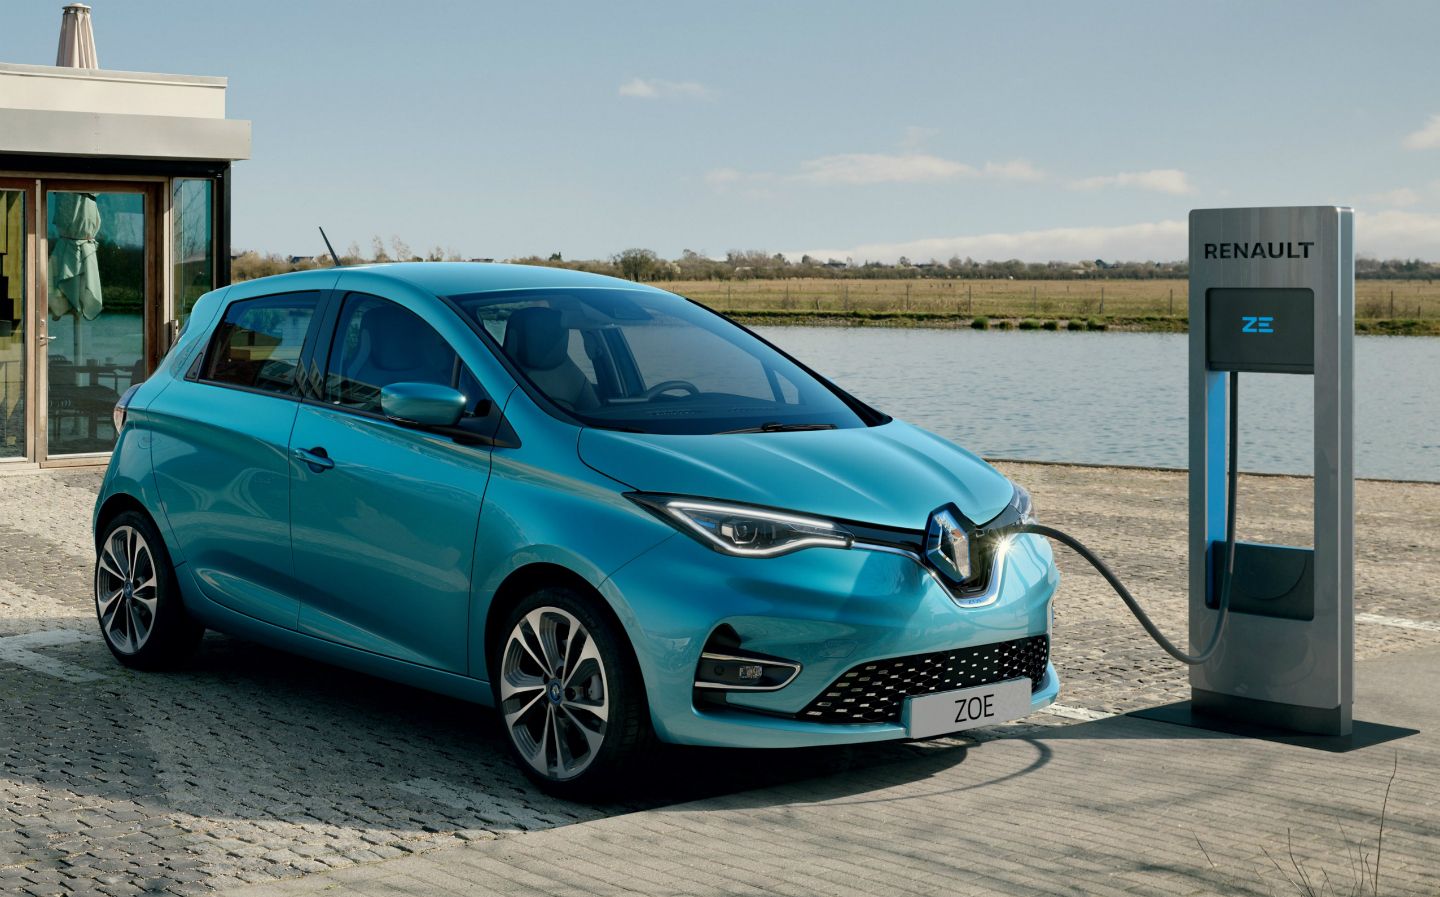 2020-Renault Zoe at charging station